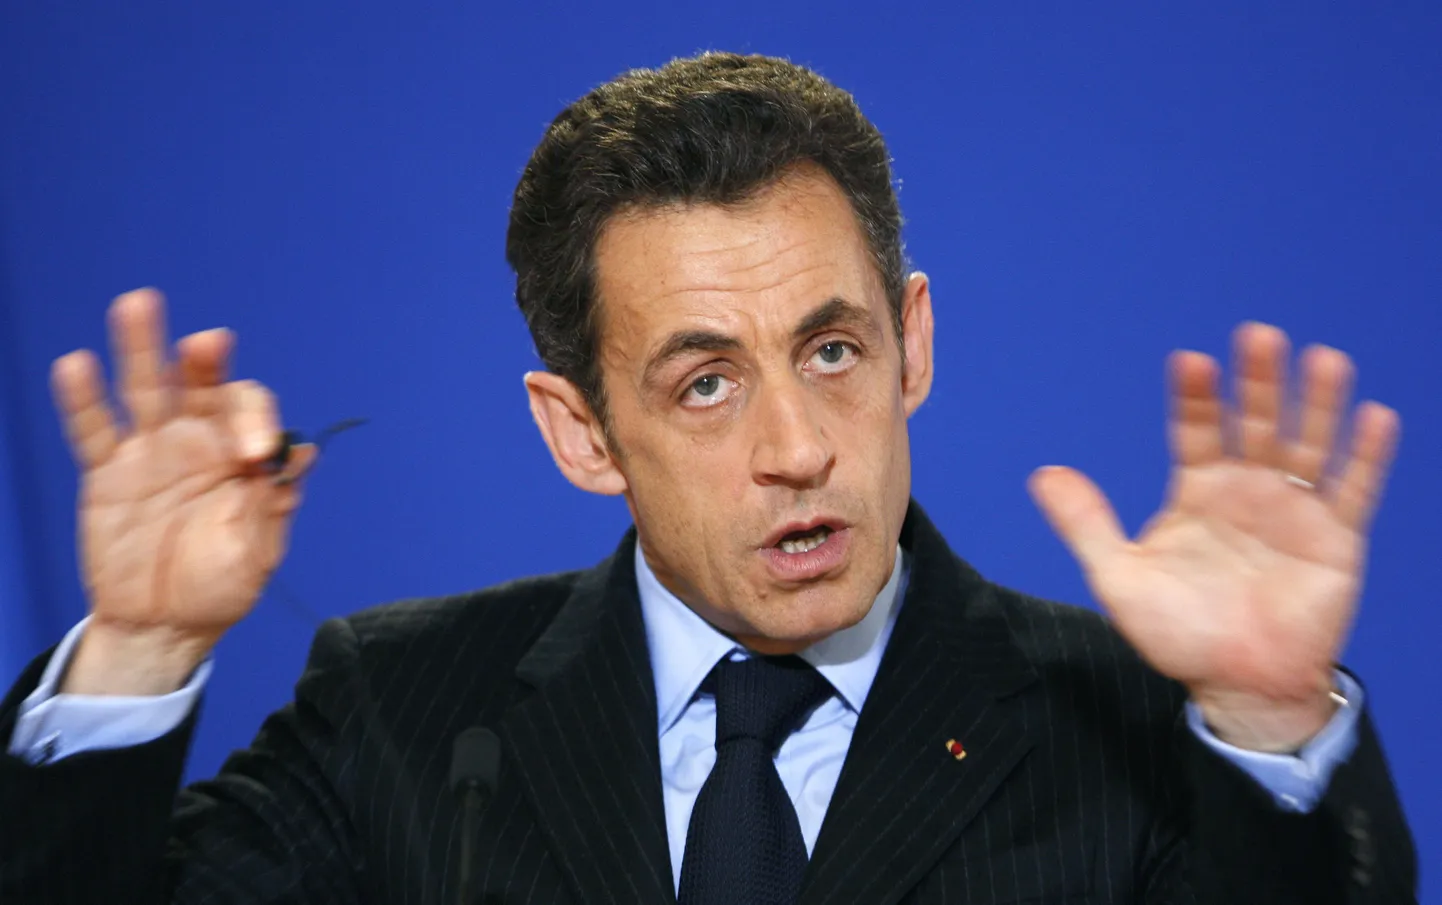 Николя Саркози.